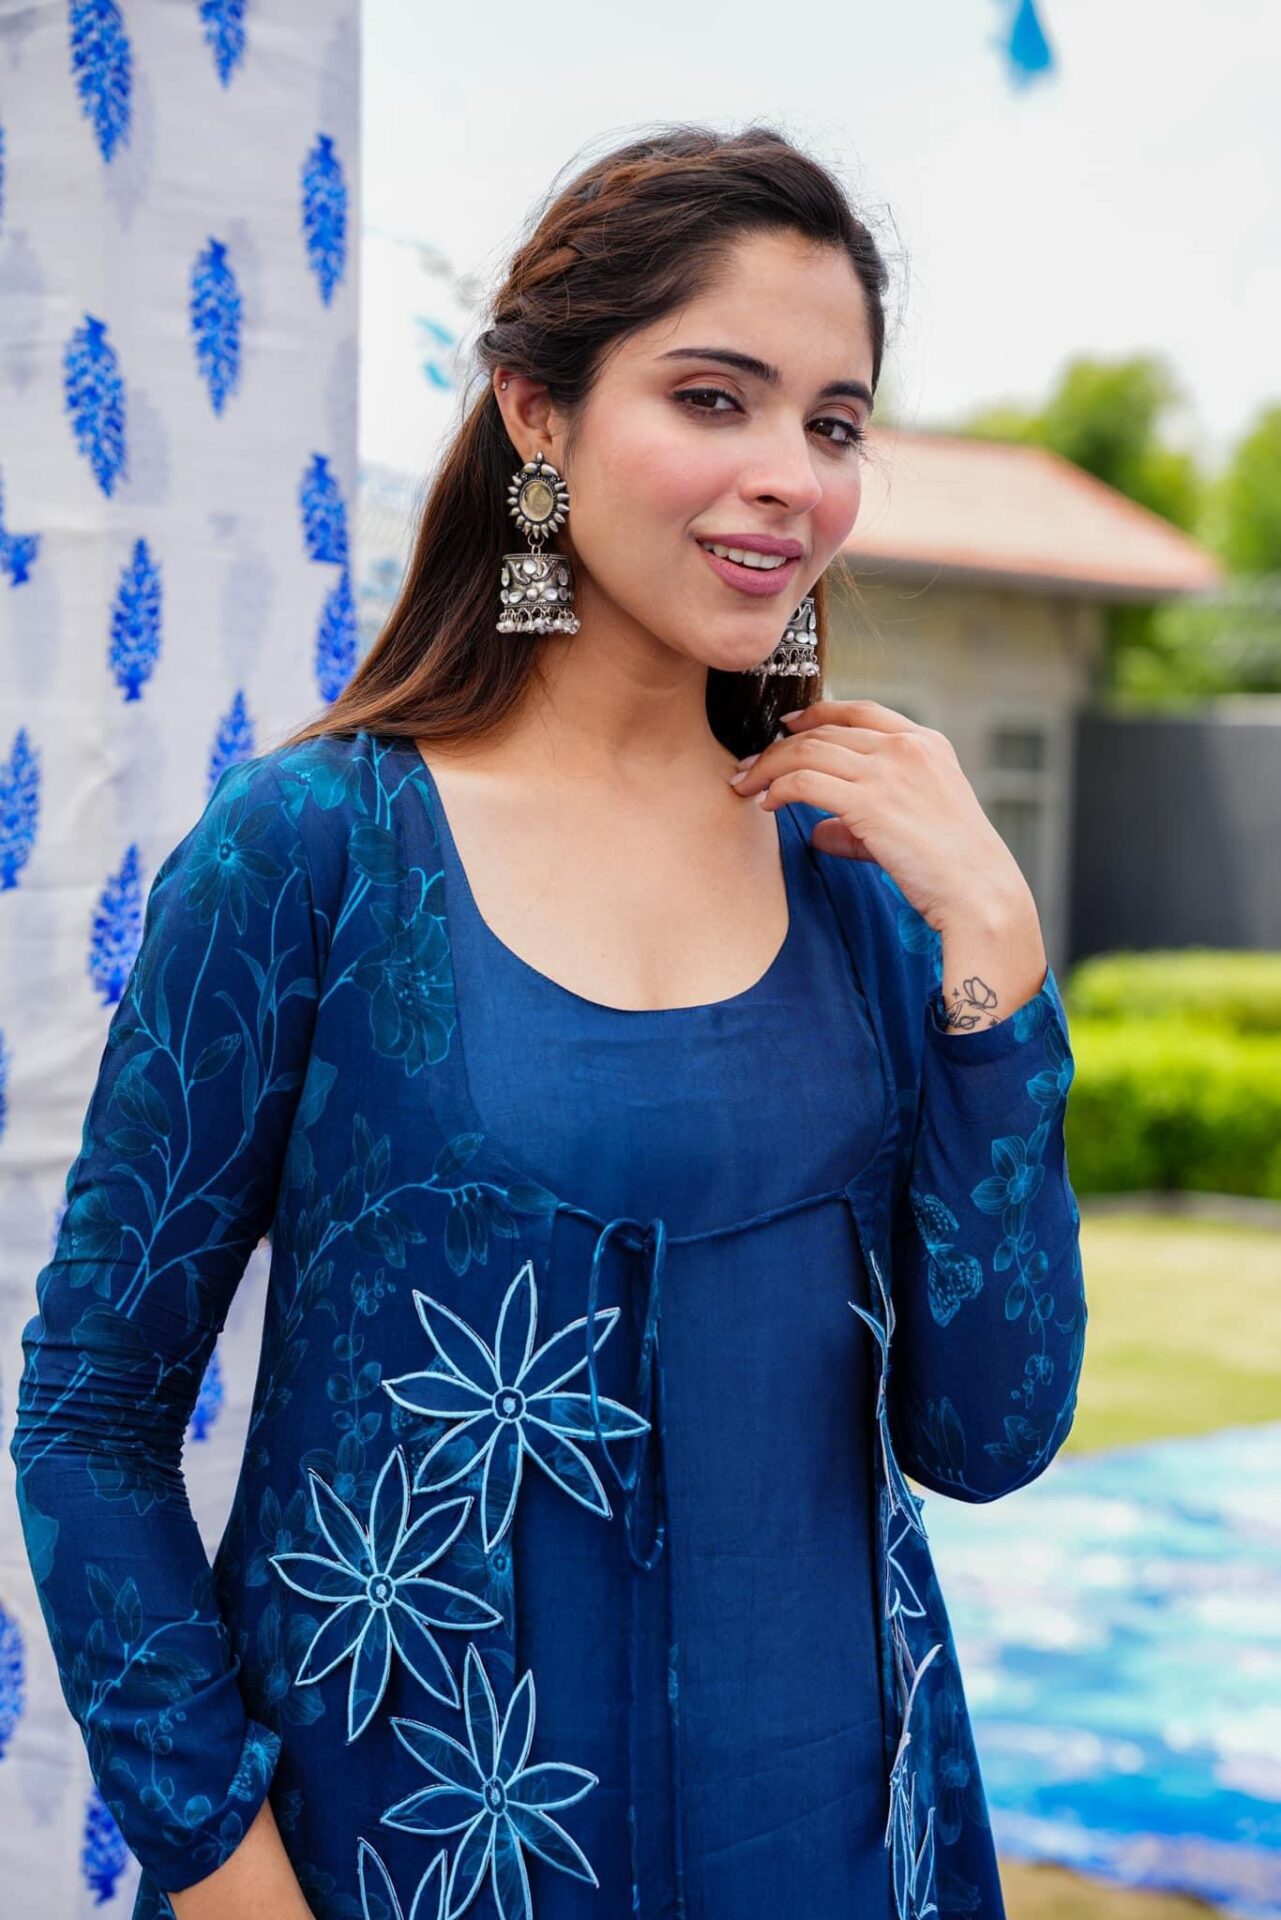 Modish fusion wear set - Buy Designer Ethnic Wear for Women Online